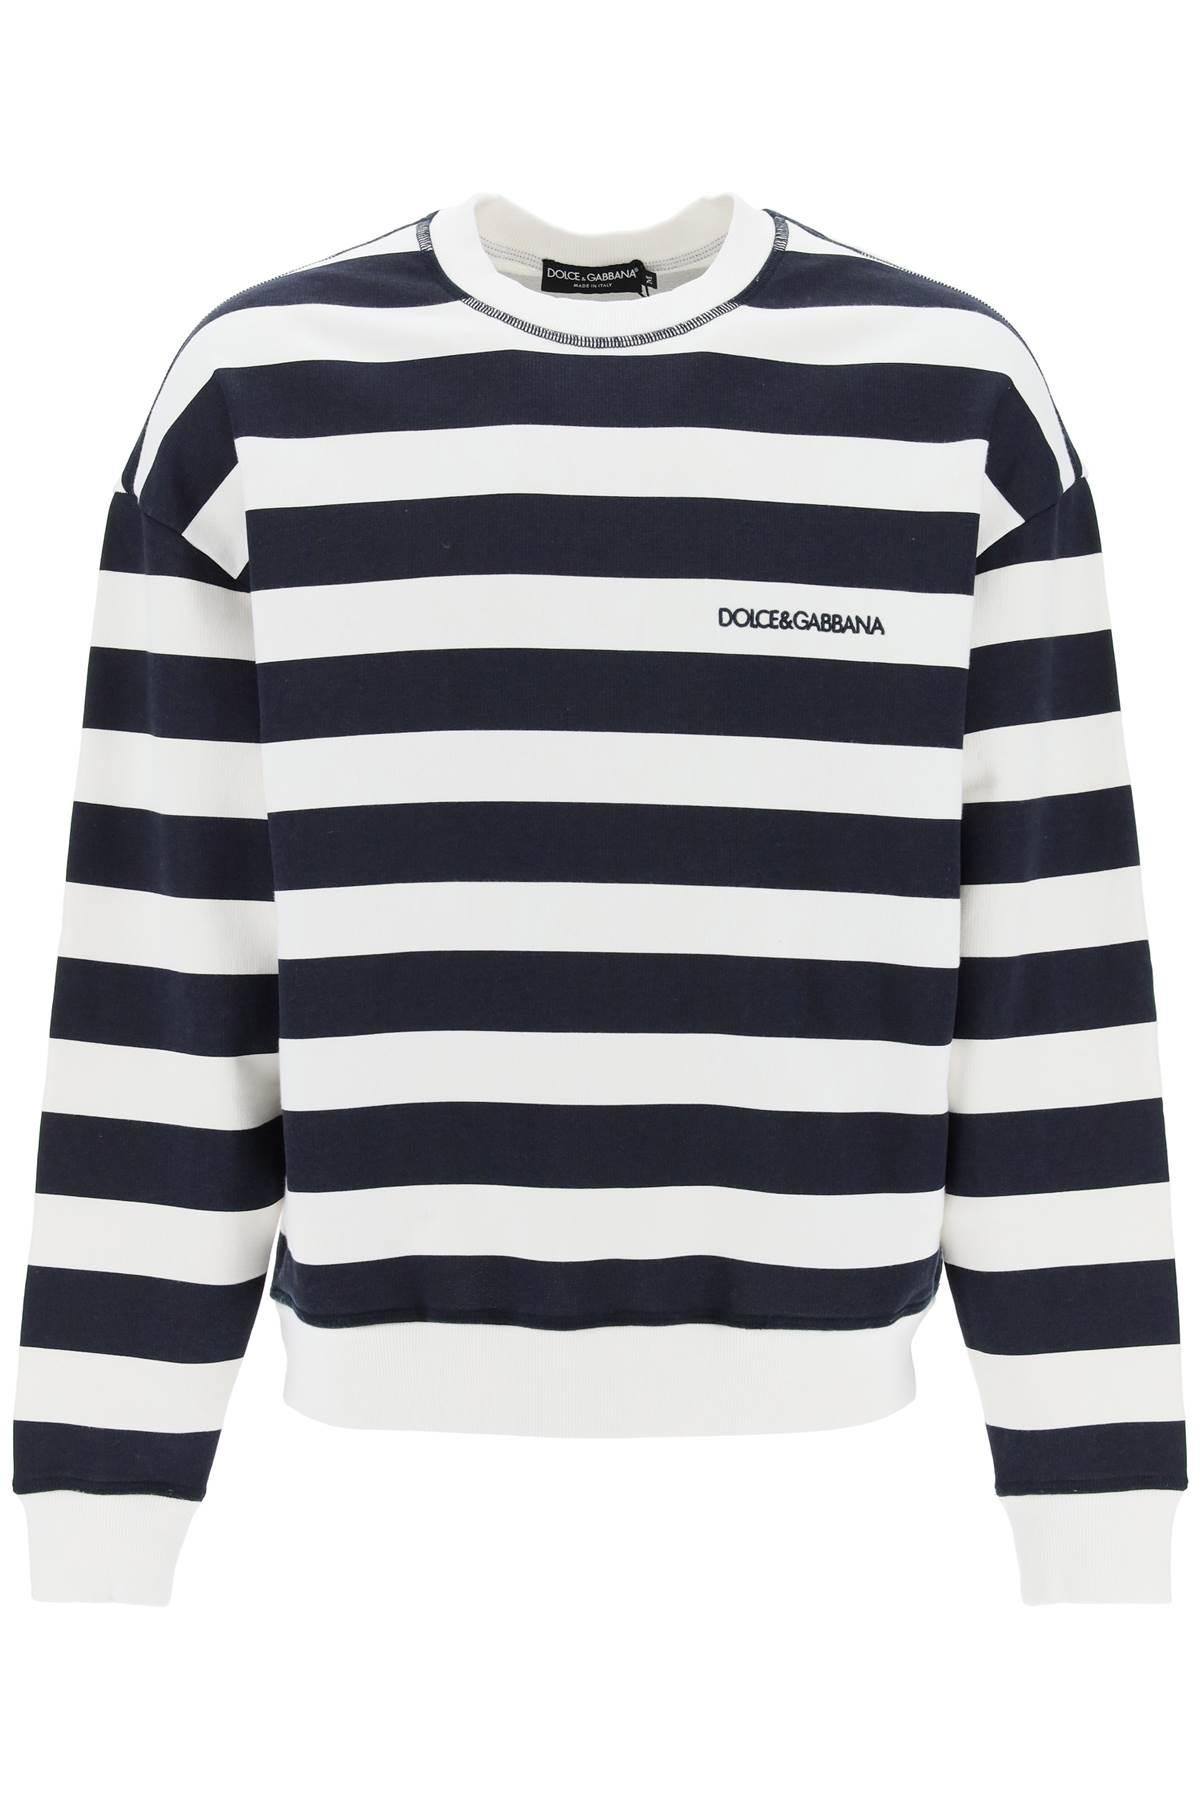 Dolce & Gabbana Striped Sweatshirt With Embroidered Logo - 1